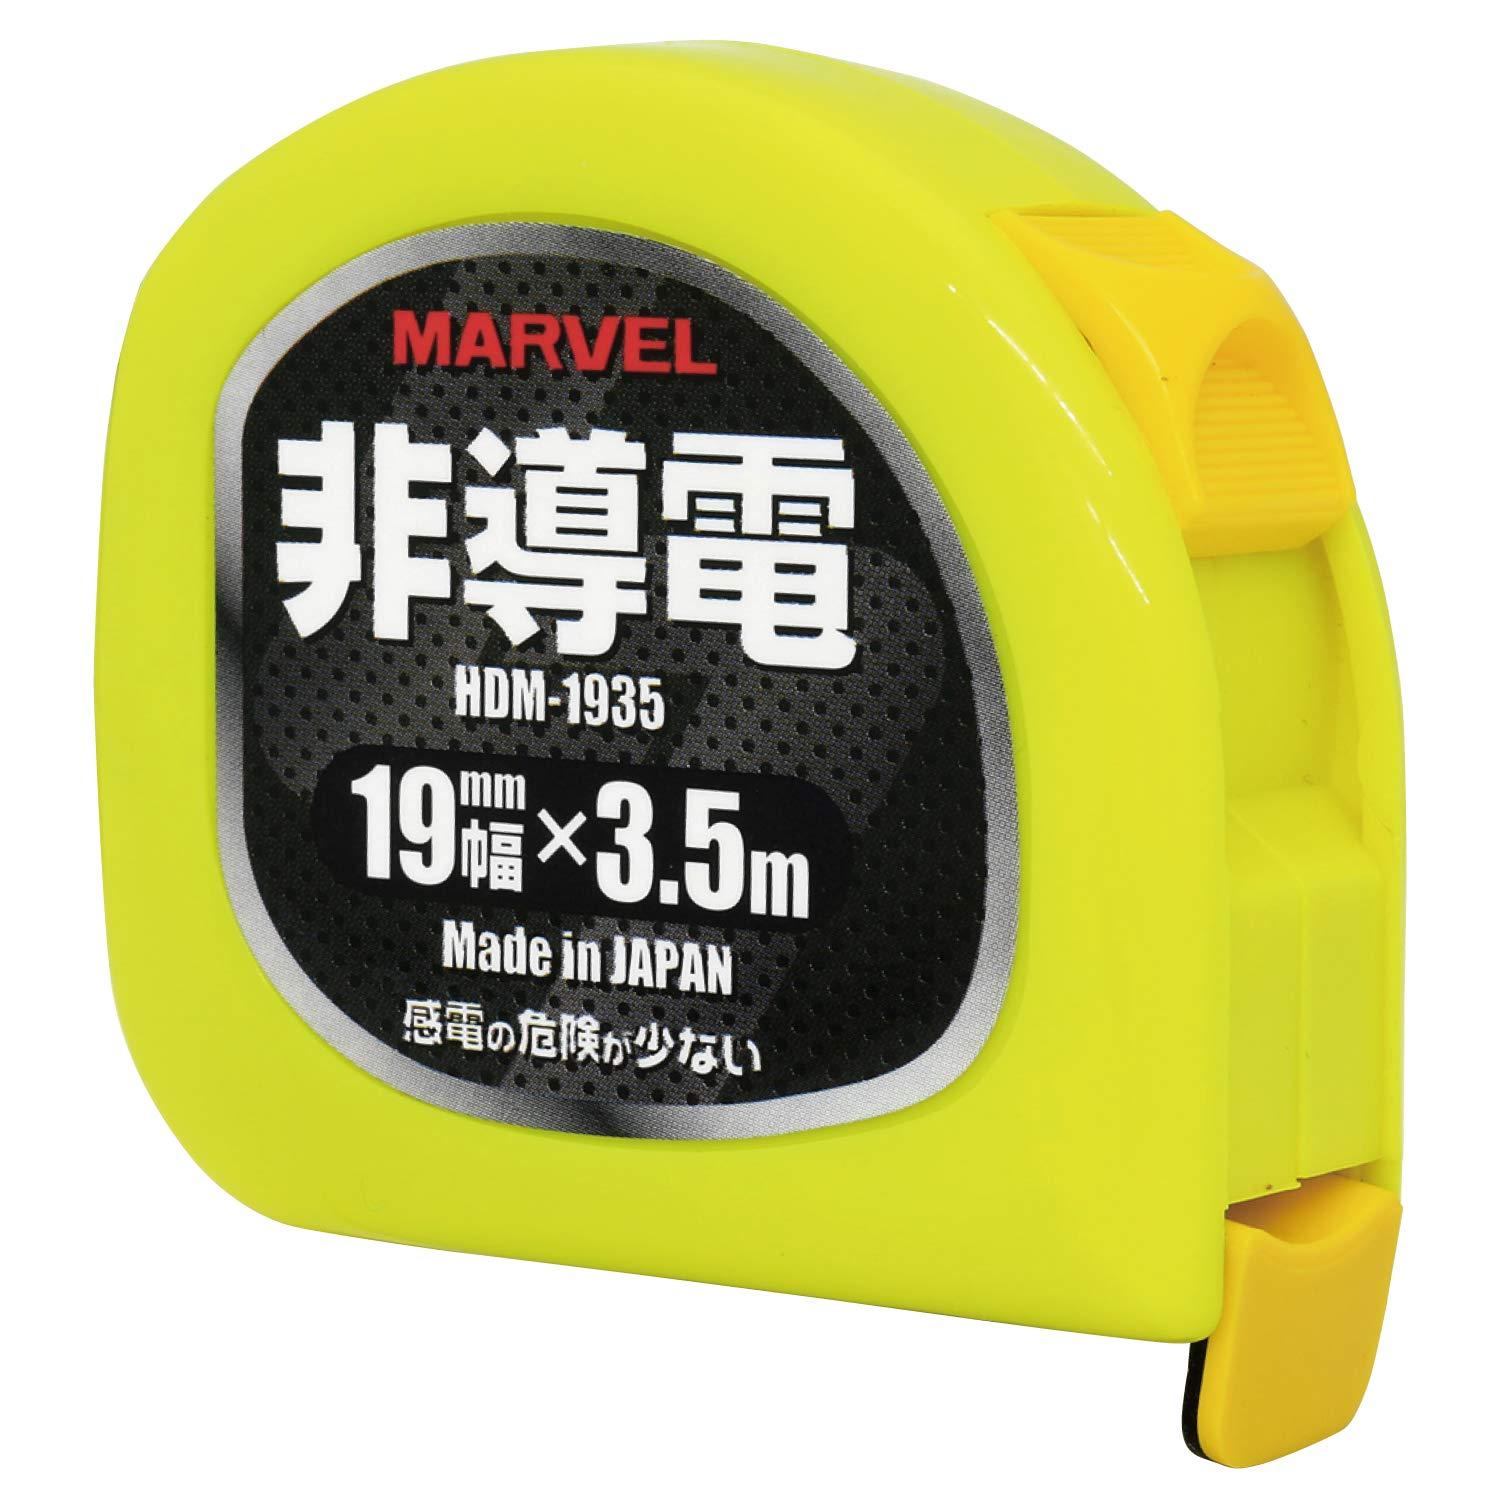 }[x(MARVEL) 񓱓dW[ HDM1935 }[x(Marvel)